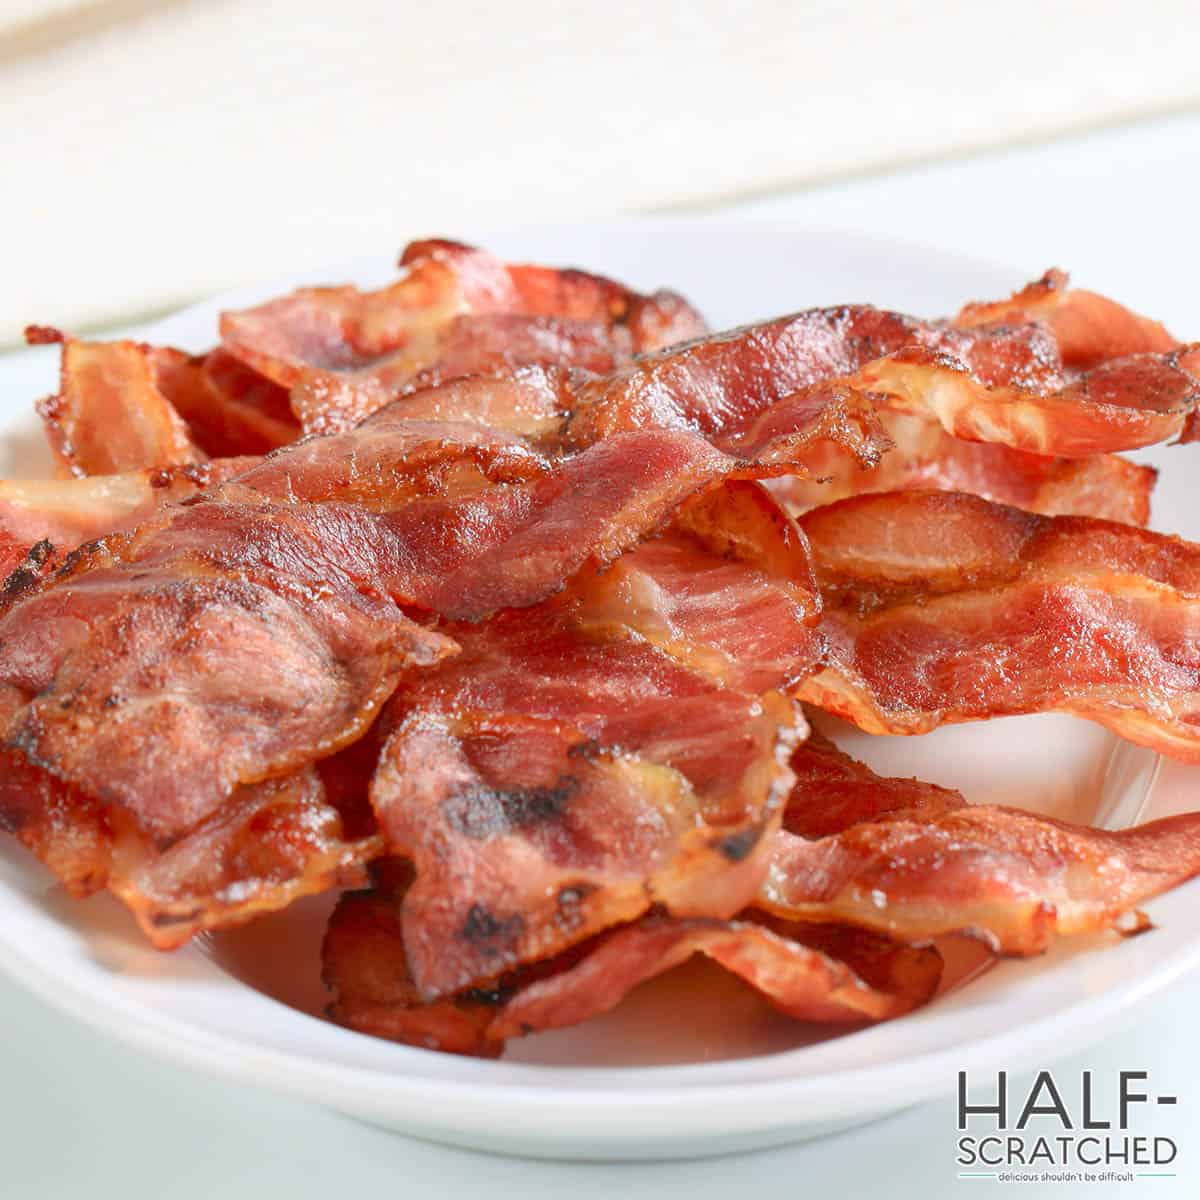 Ready bacon on a plate